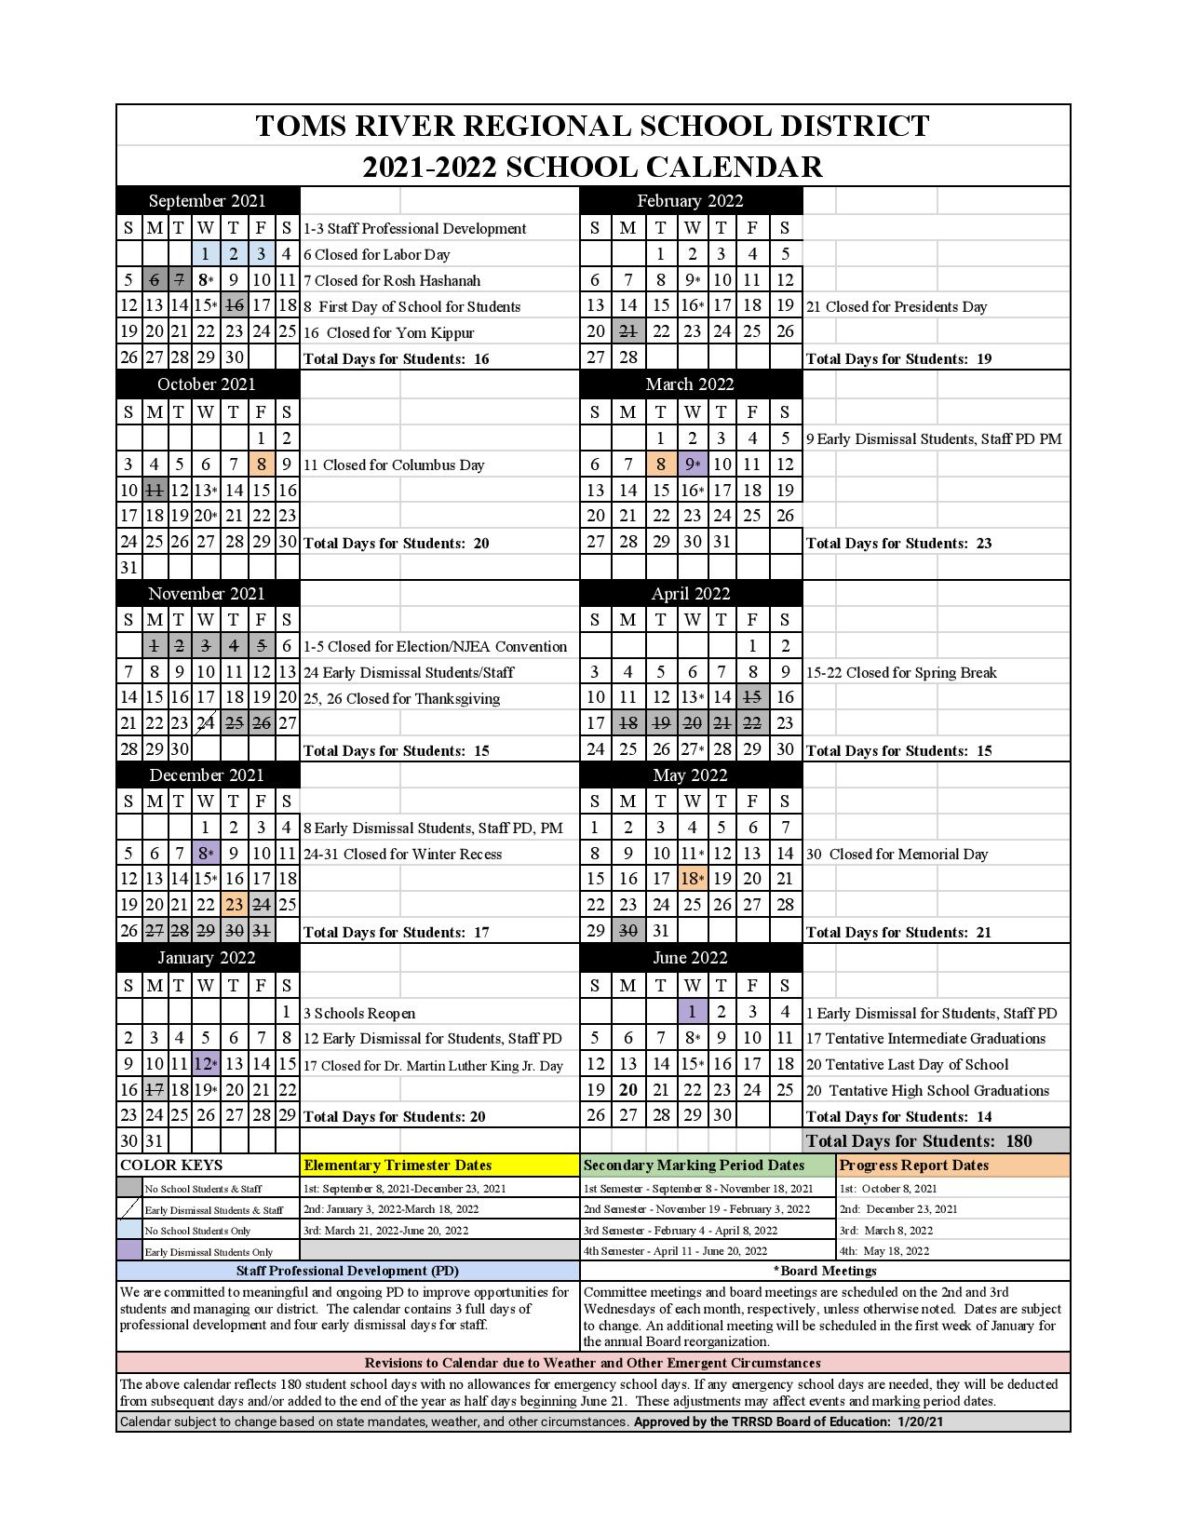 Toms River School District Calendar 20212022 in PDF